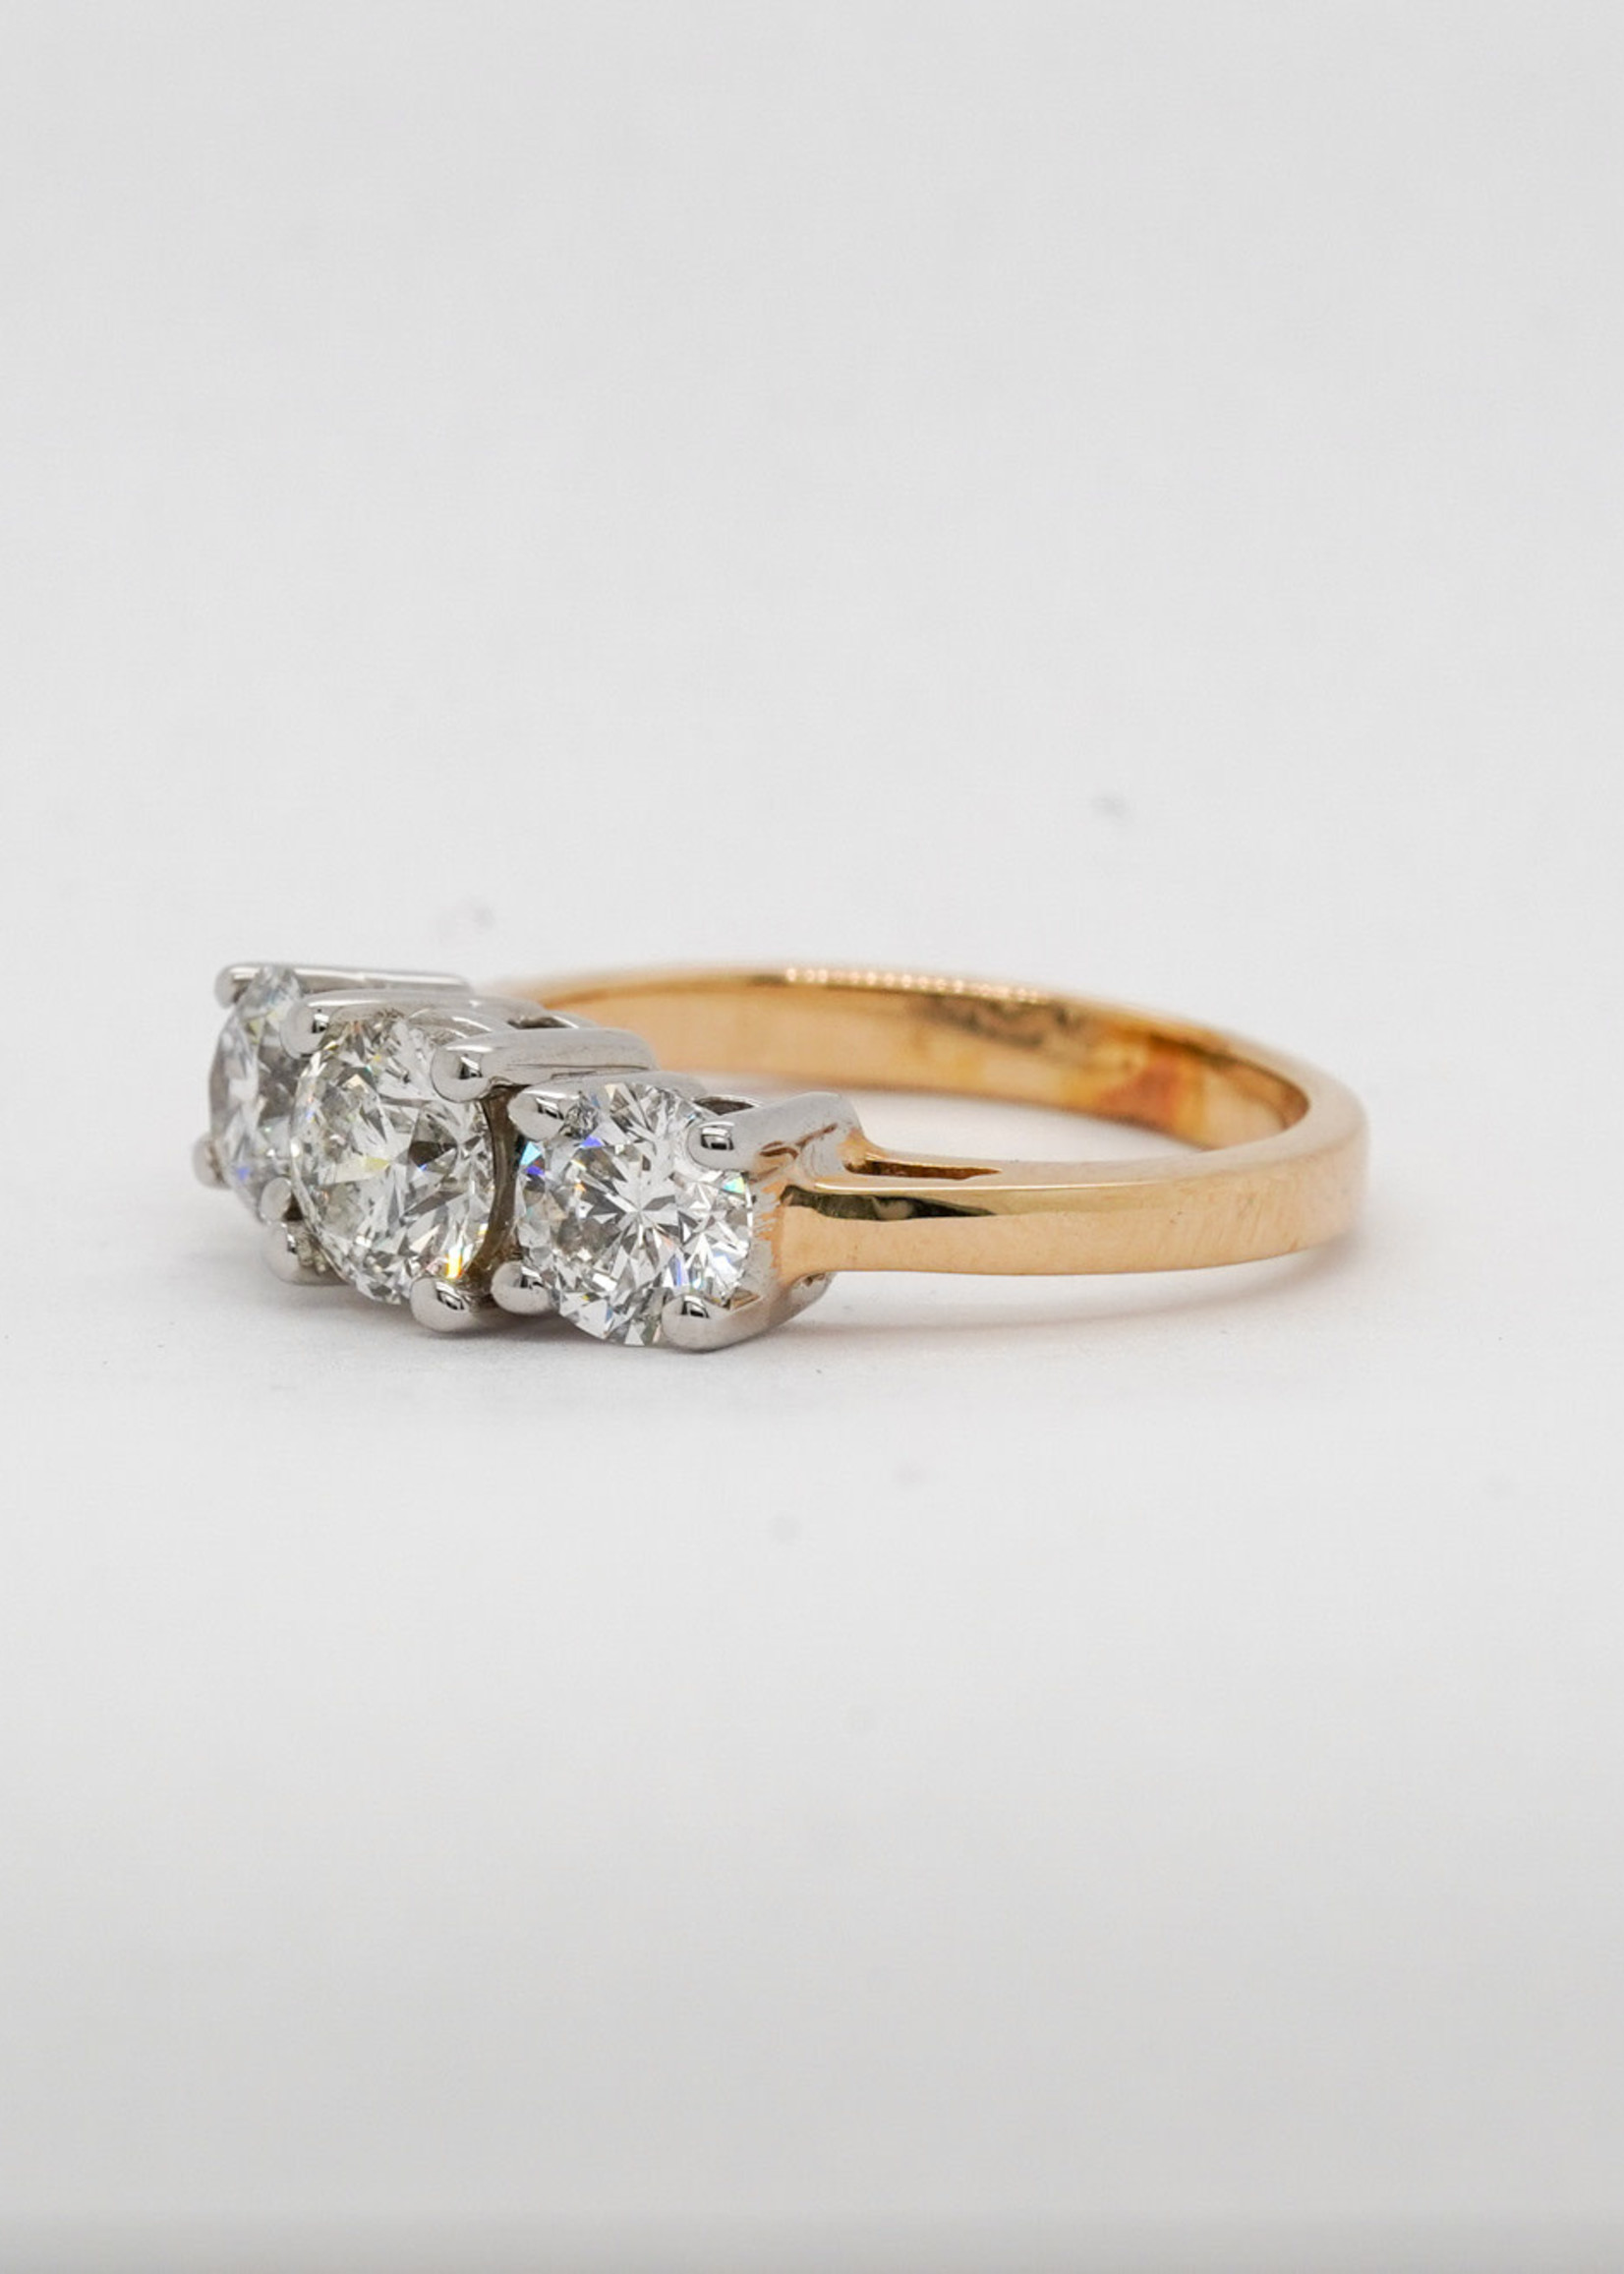 14KY 4.35g 1.95ctw (.75ctr) I/I1 Round Diamond Three Stone Engagement Ring (size 6.5)